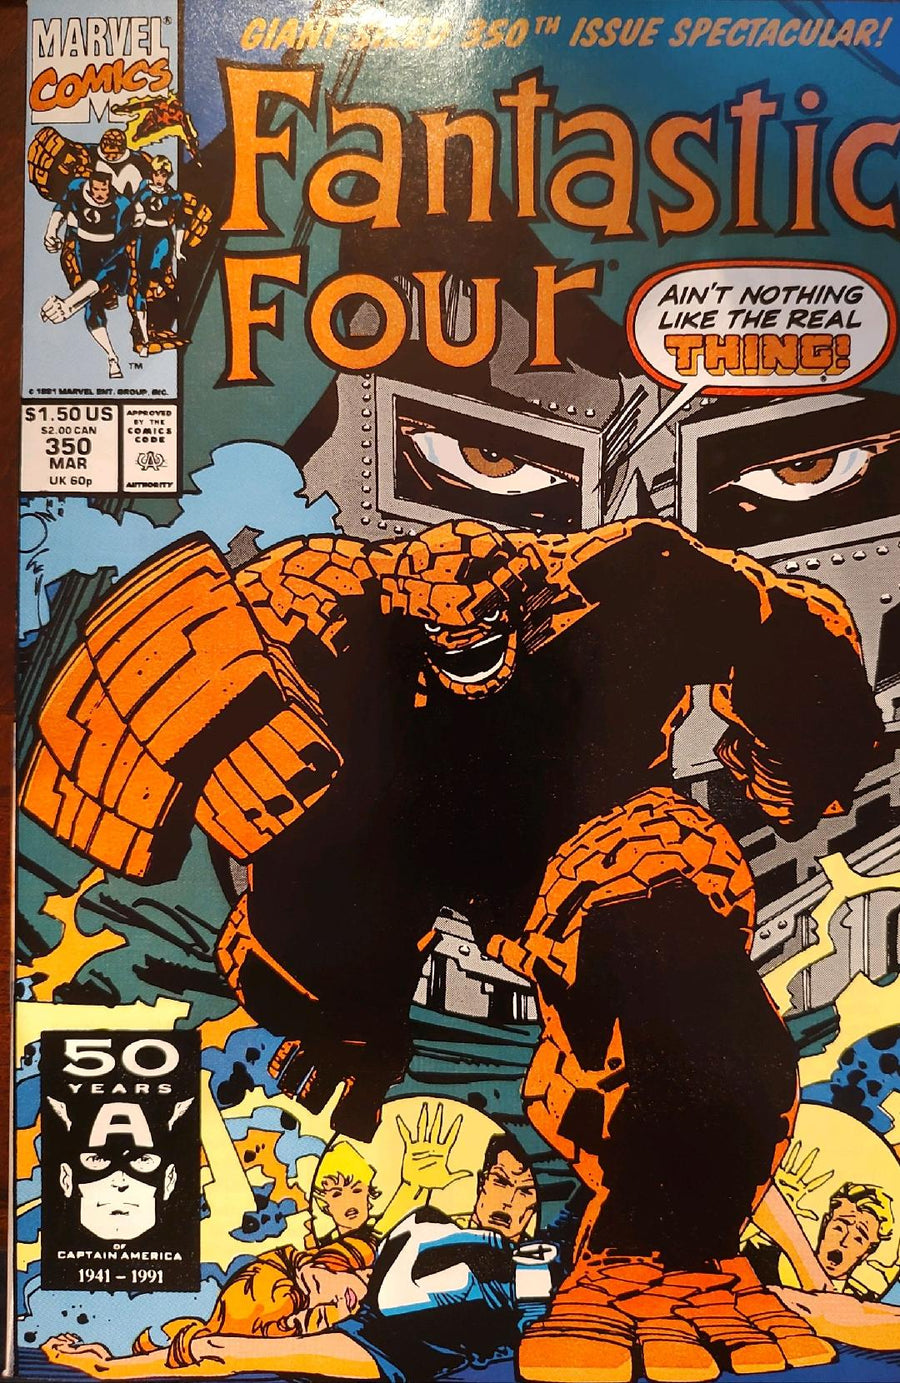 Fantastic Four #350 Comic Book Cover